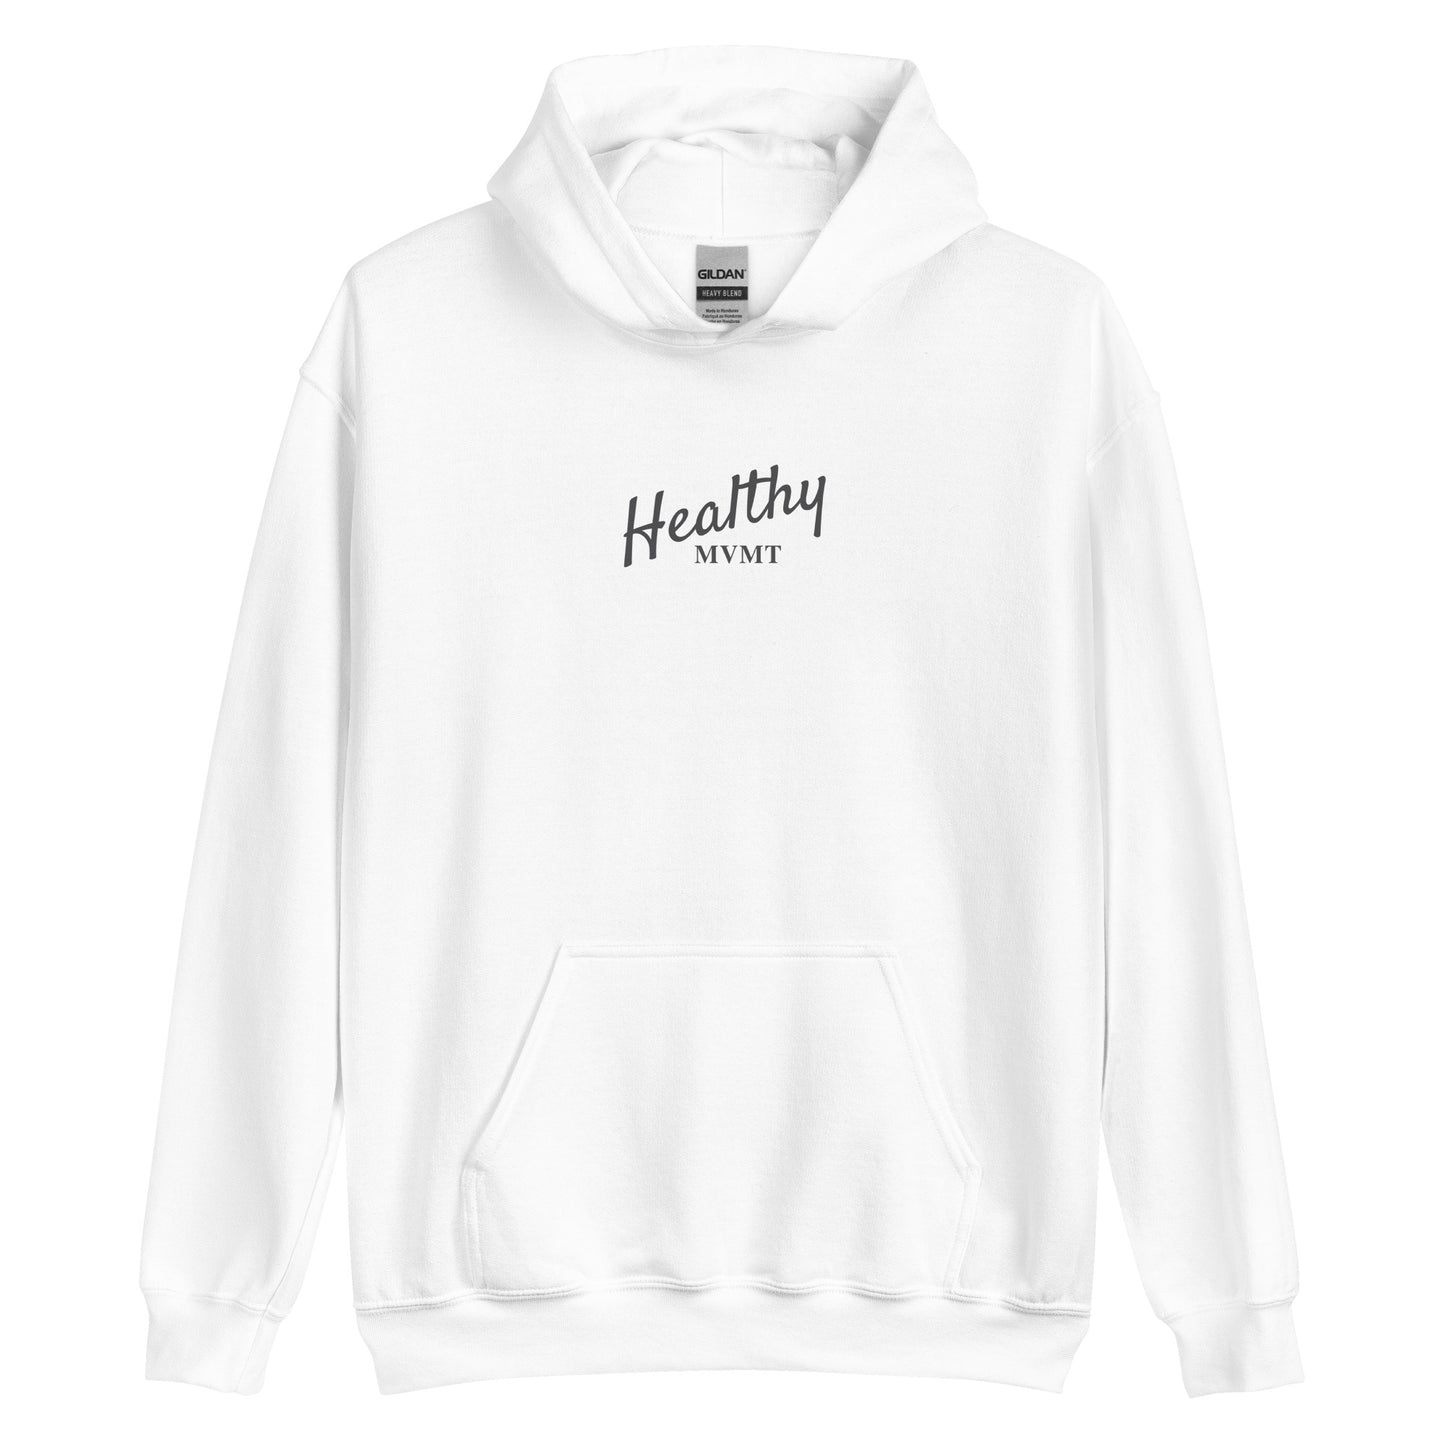 HealthyMVMT (White) | Women's Hoodie by HealthyMVMT